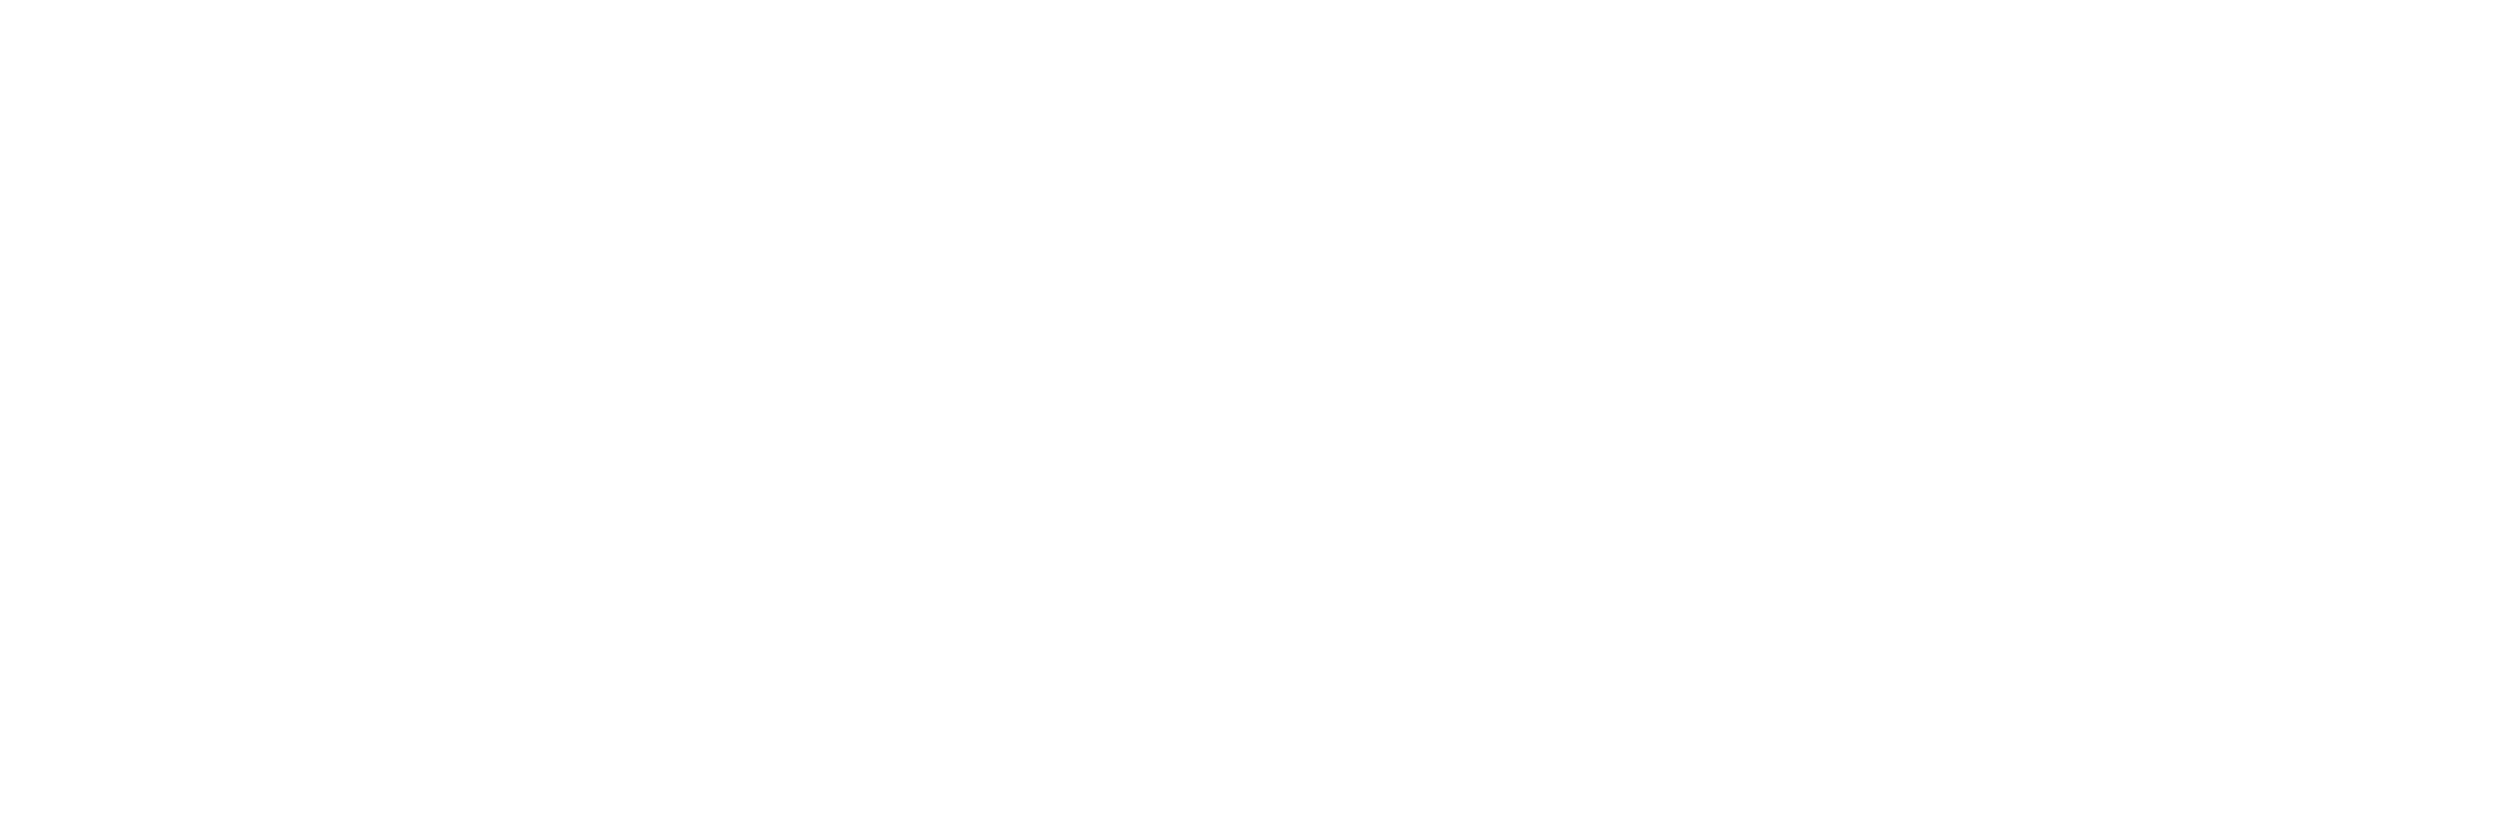 Electrónica Celular